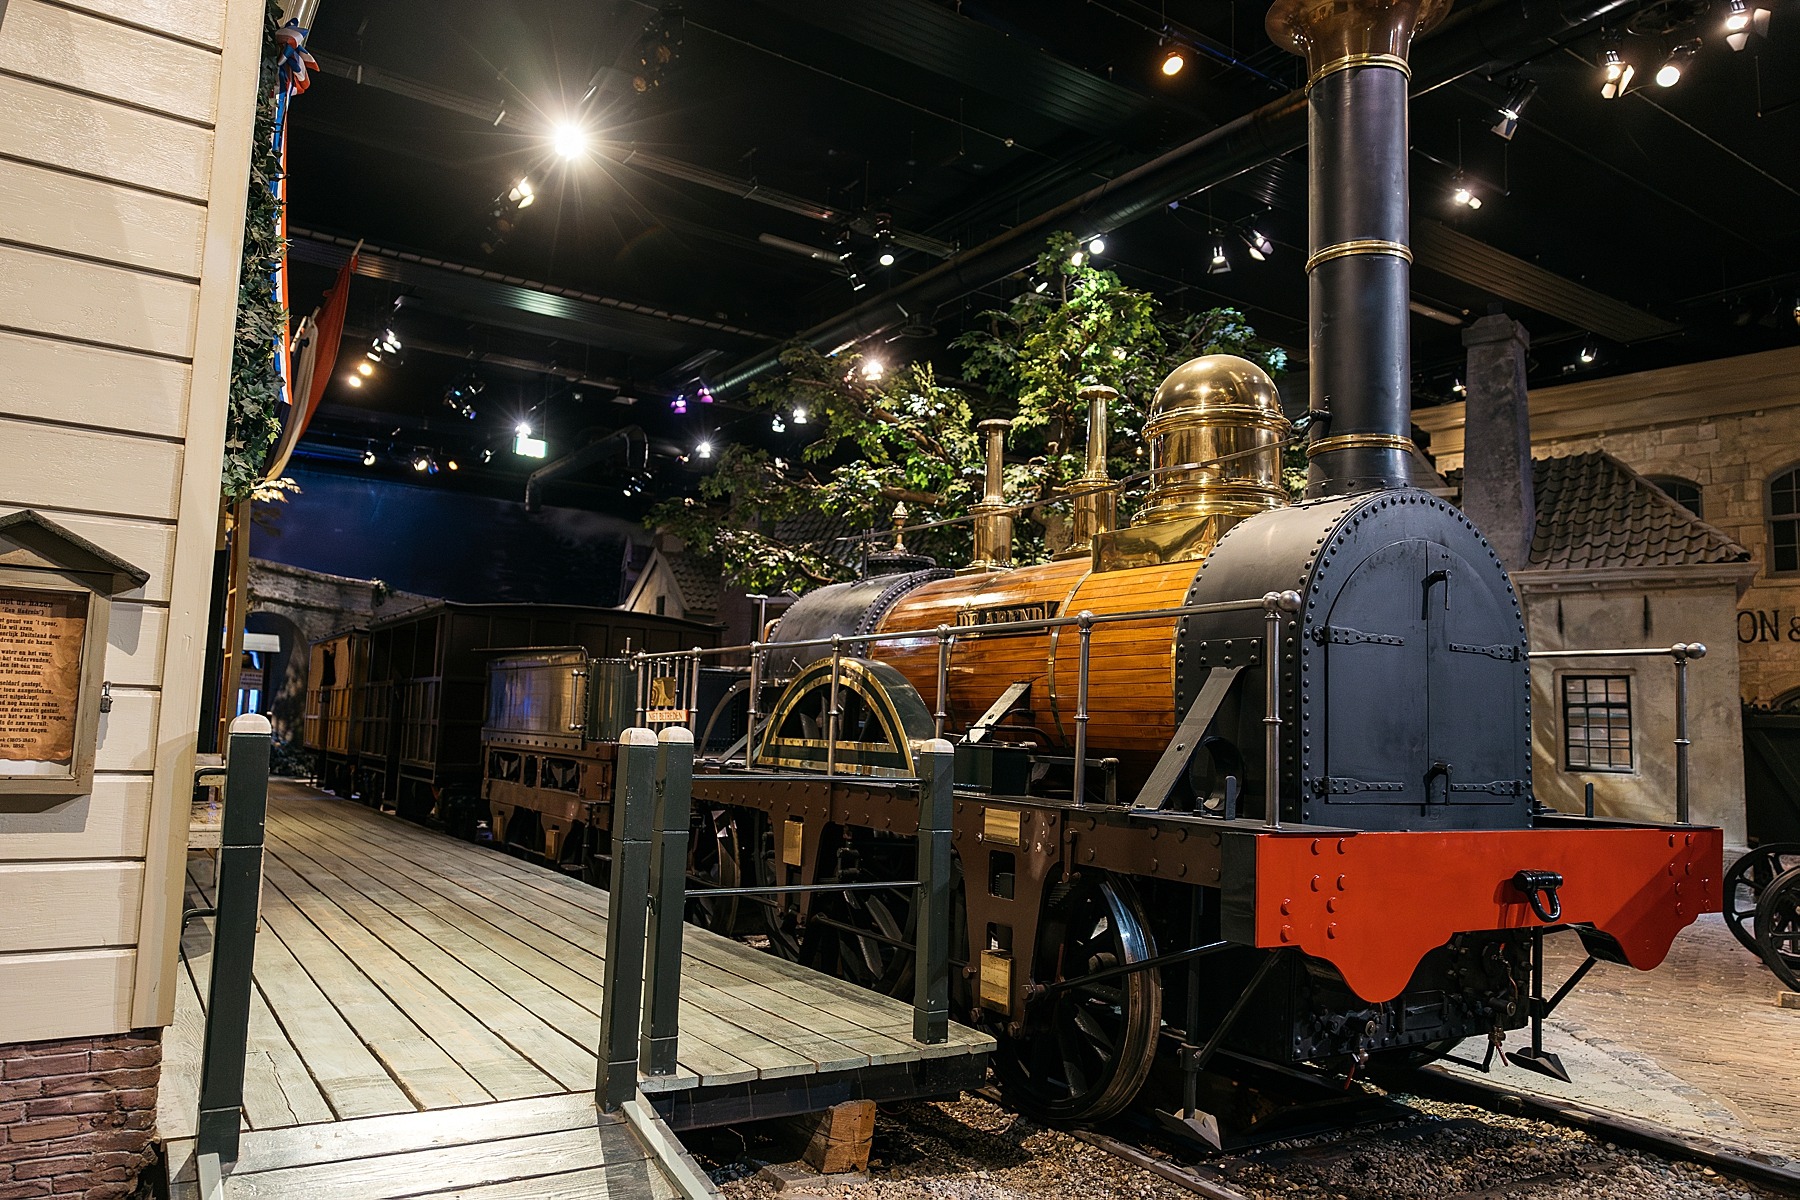 Spoorwegmuseum, l'incroyable musée du train de Utrecht 91